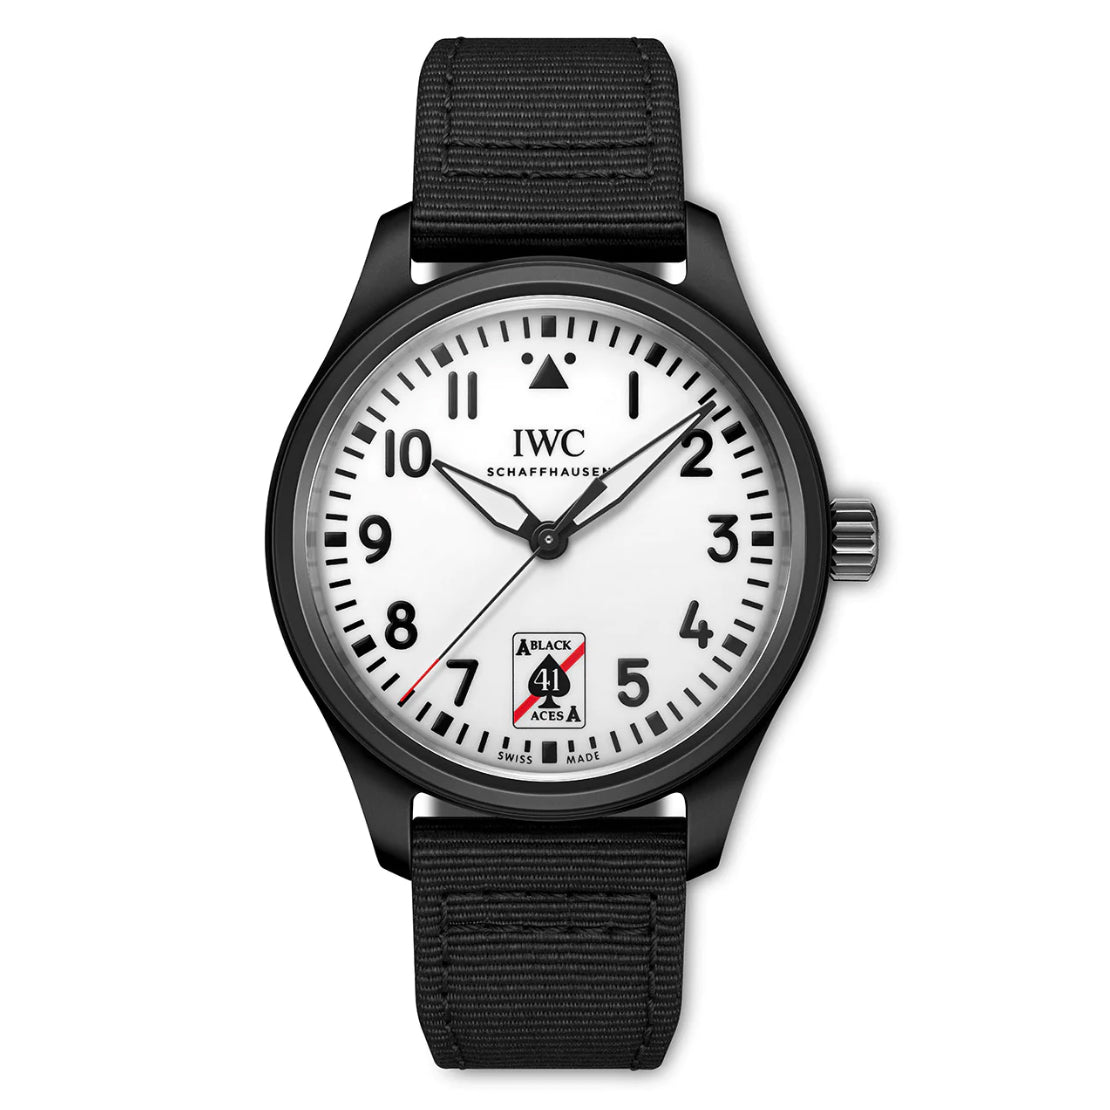 IWC Schaffhausen - Pilot's Watch Automatic 41 "Black Aces" (IW326905)